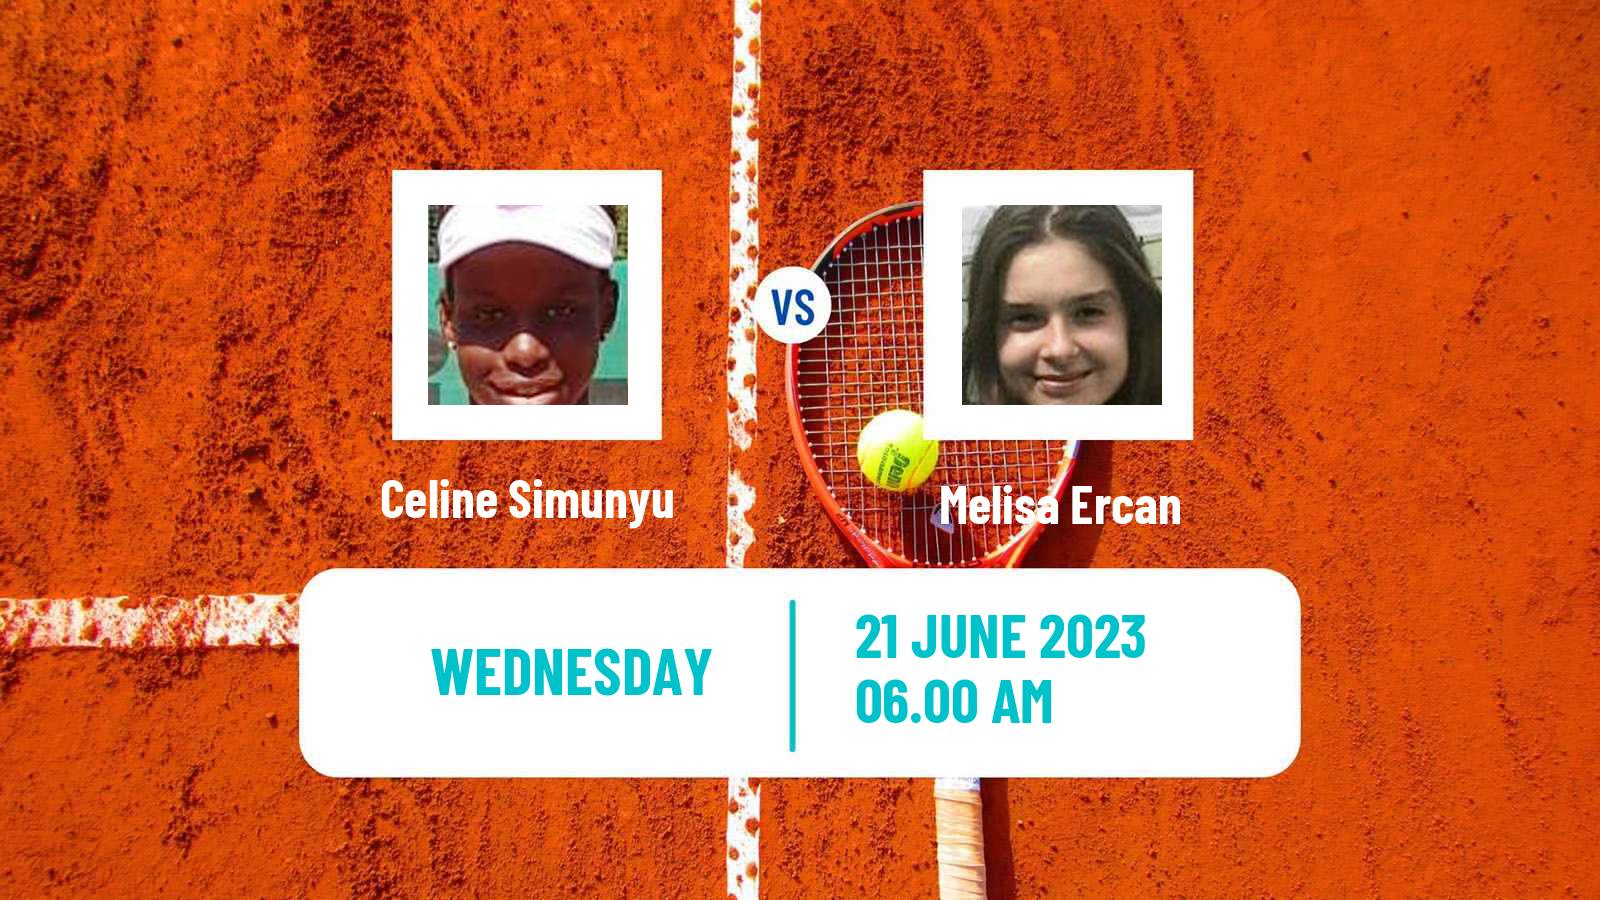 Tennis ITF W15 Monastir 20 Women Celine Simunyu - Melisa Ercan